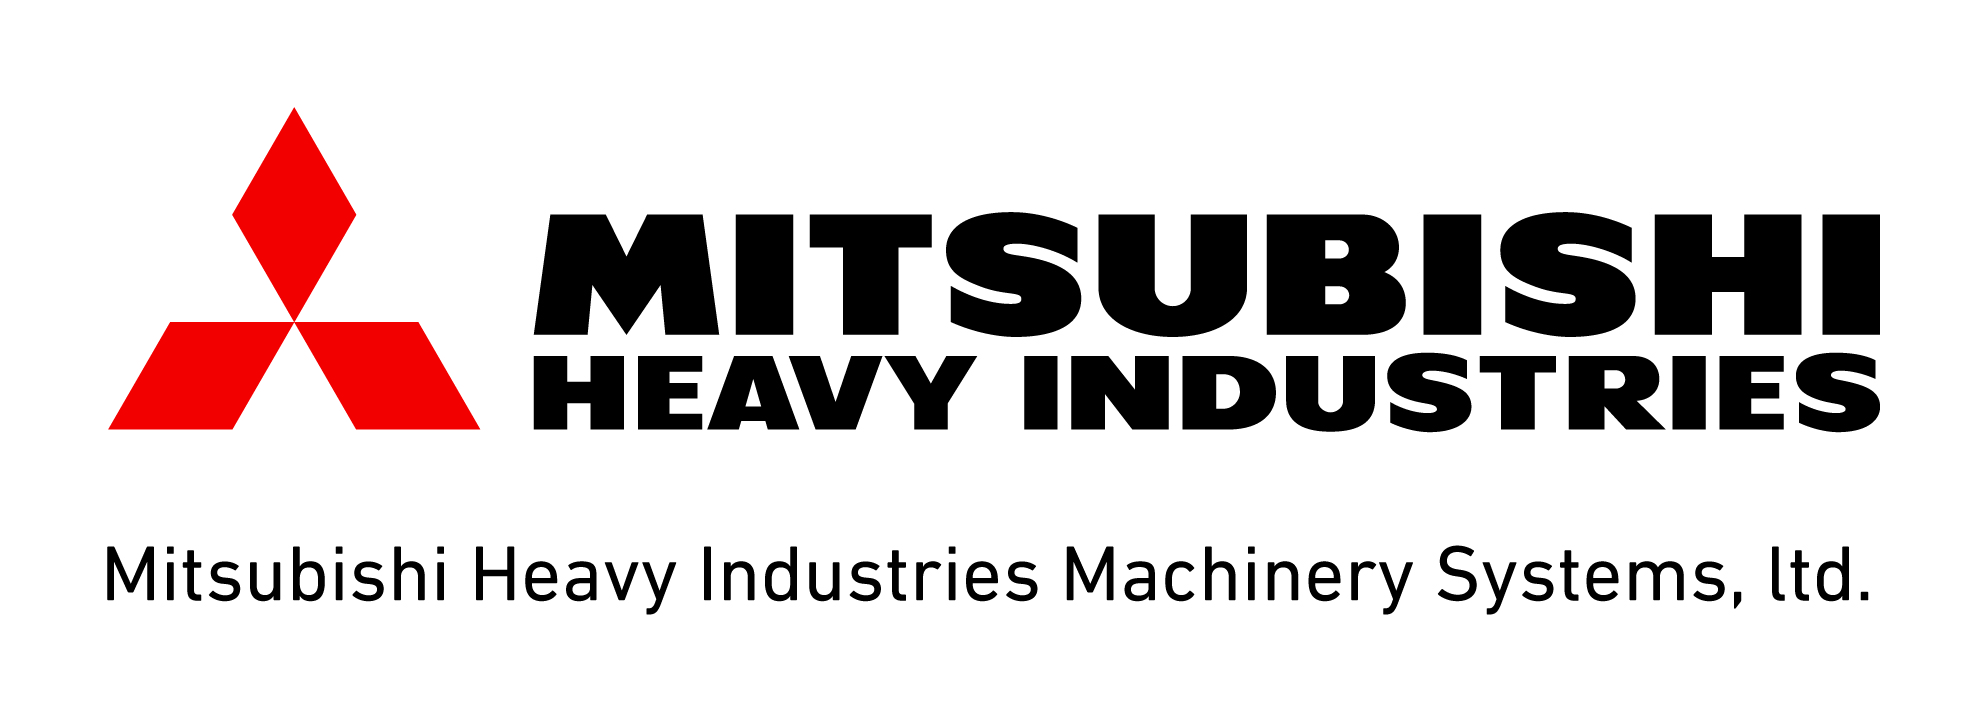 Mitsubishi Heavy Industries Machinery Systems, Ltd.